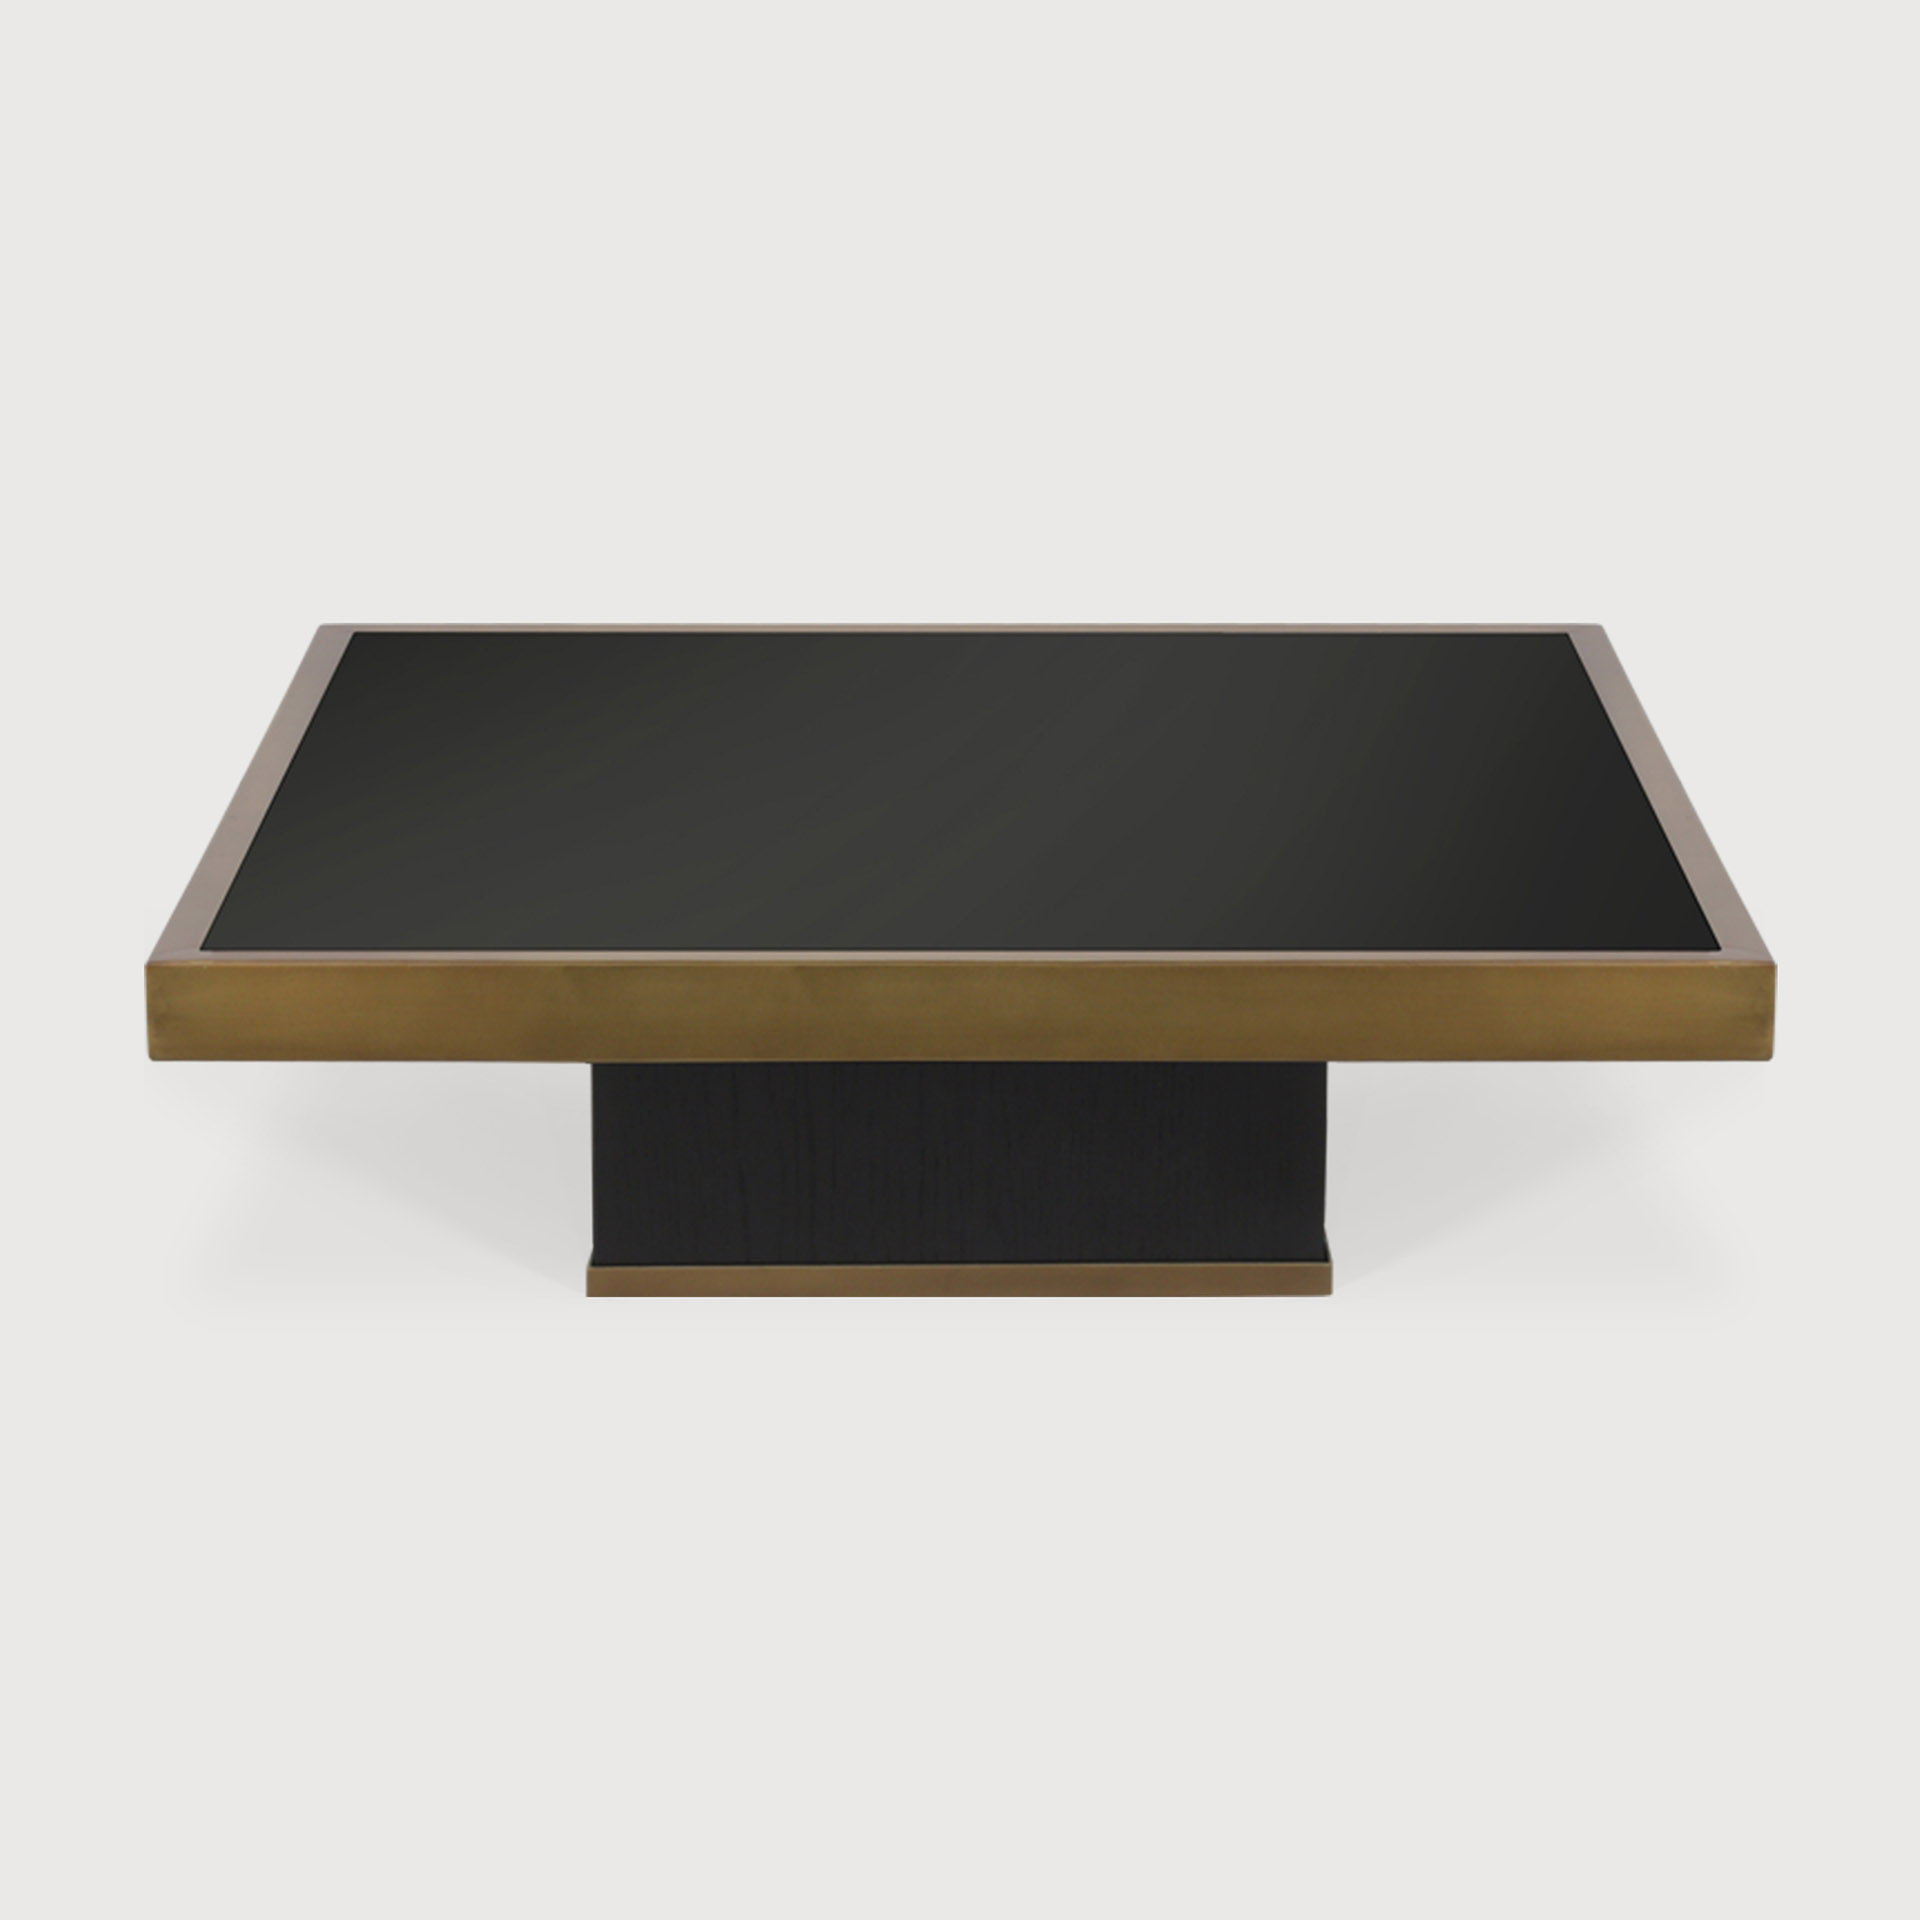 [20785] Trifecta coffee table (61x61x23cm)